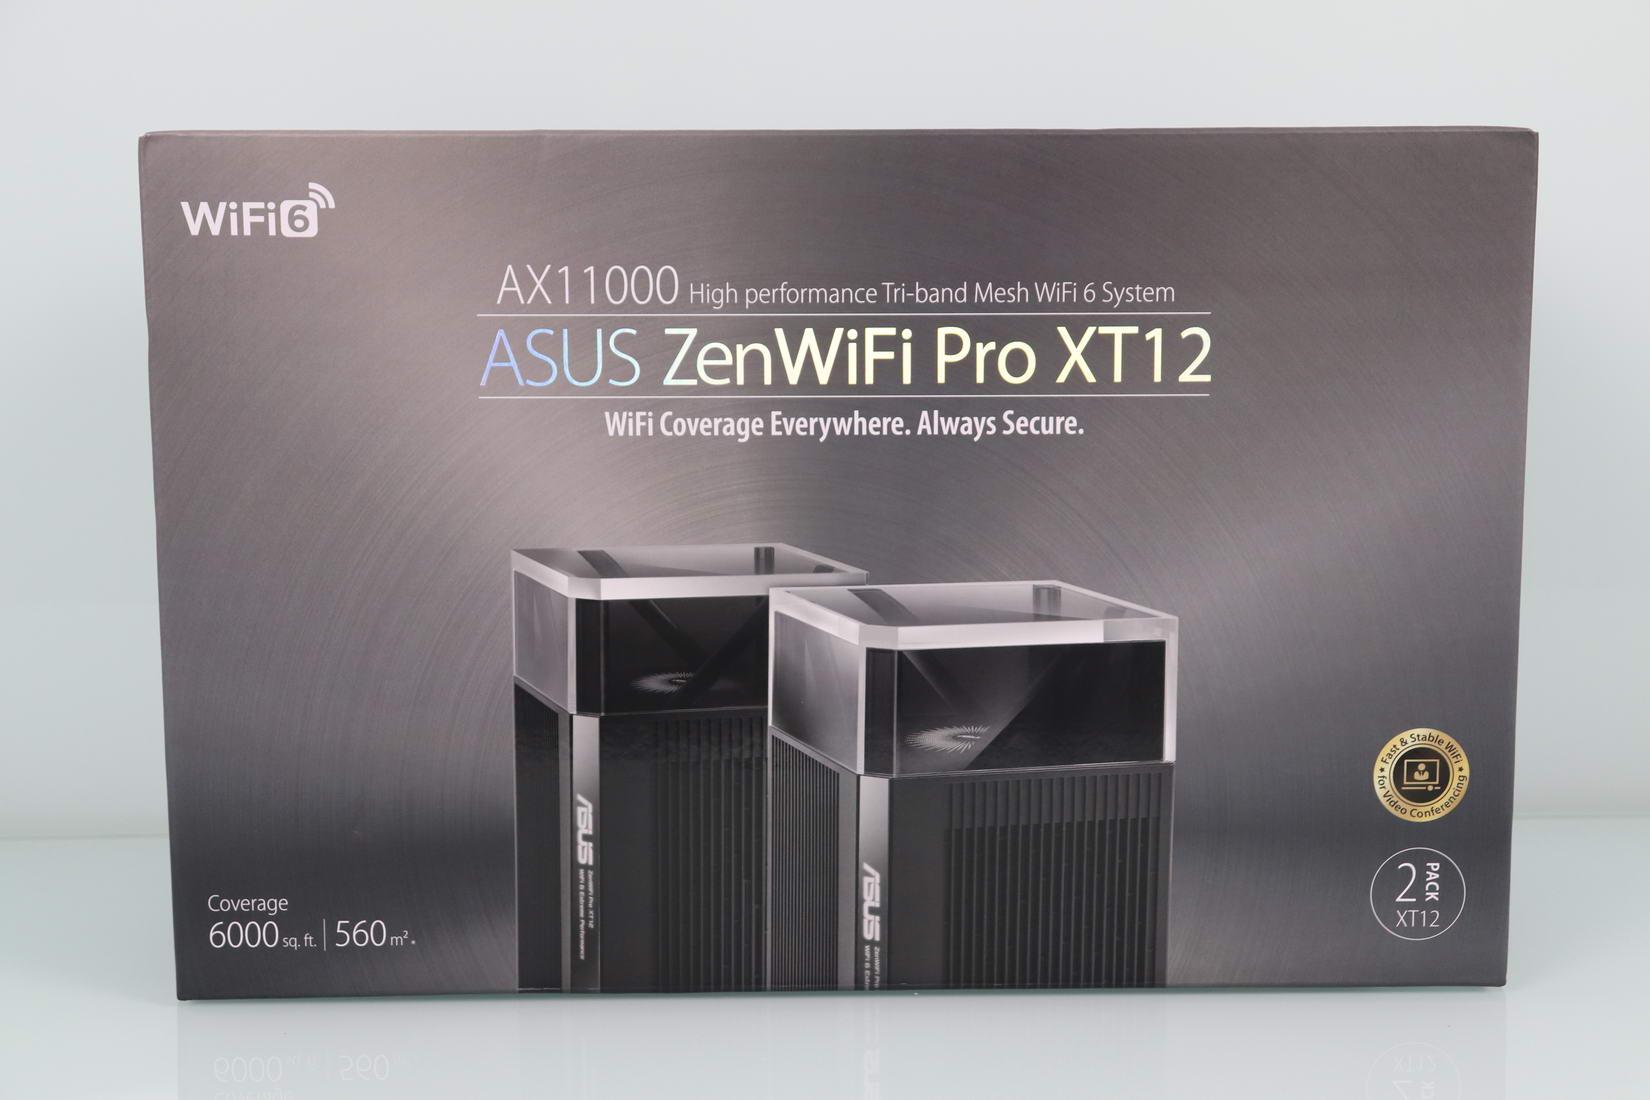 Frontal de la caja del sistema WiFi Mesh ASUS ZenWiFi Pro XT12